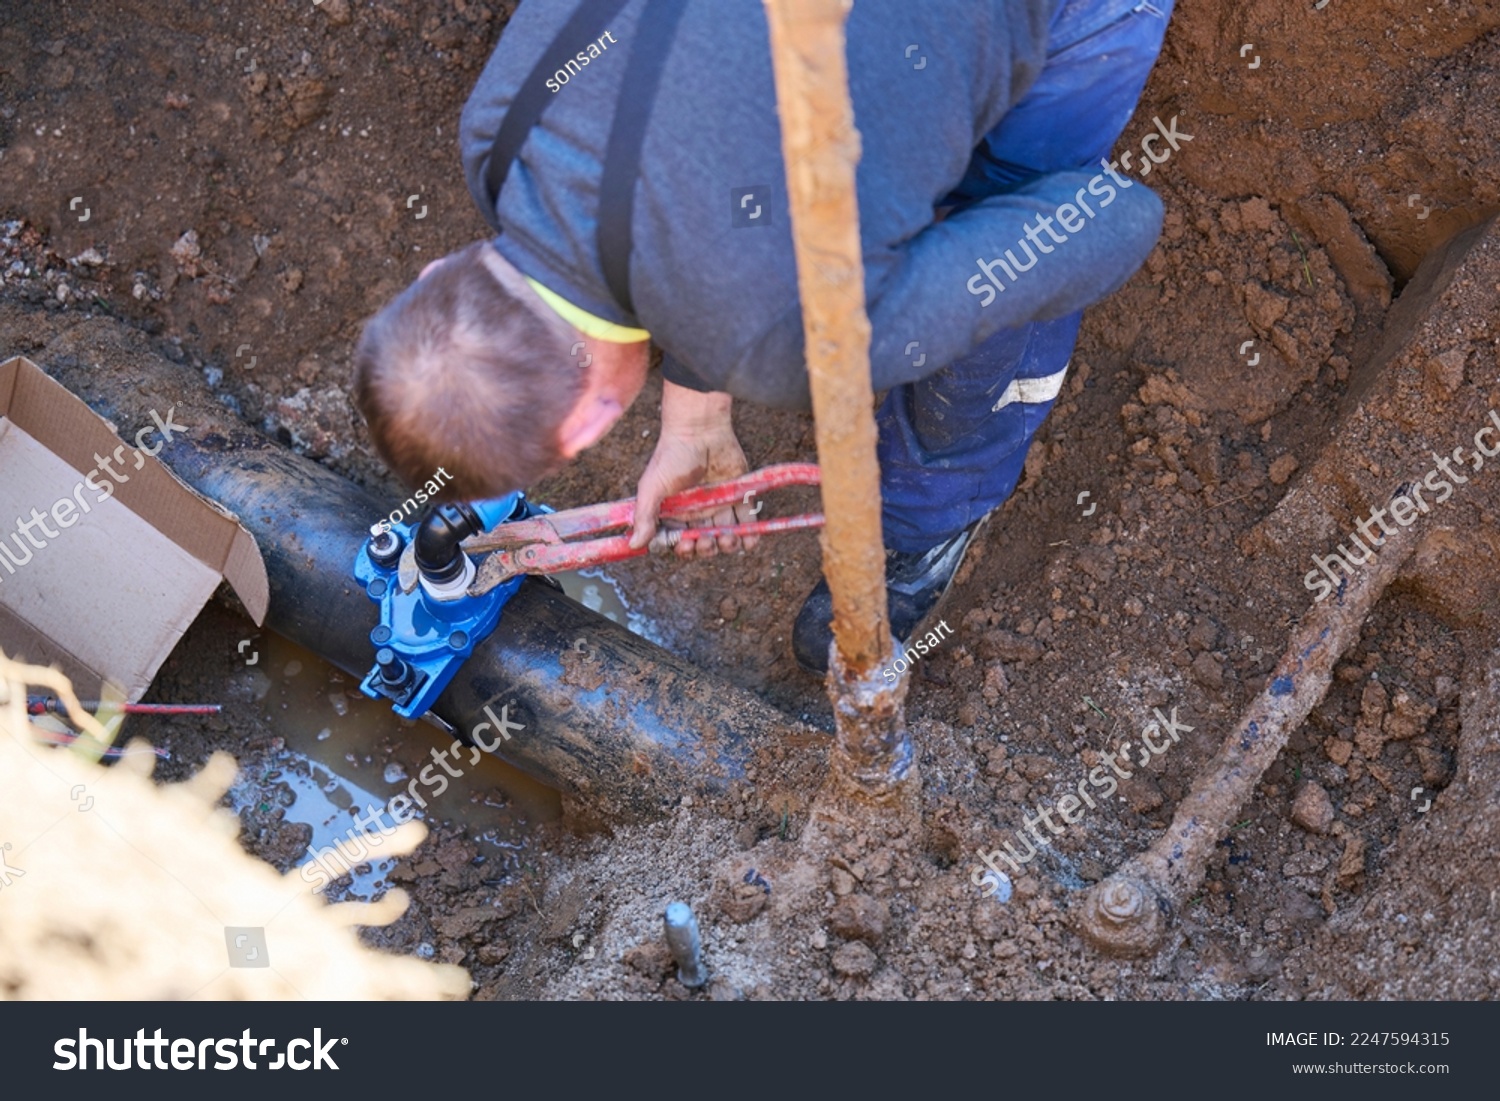 Construction worker, repairing a broken water pipe.
Construction site with new Water Pipes in the ground. Plumber work repair water line connect. #2247594315